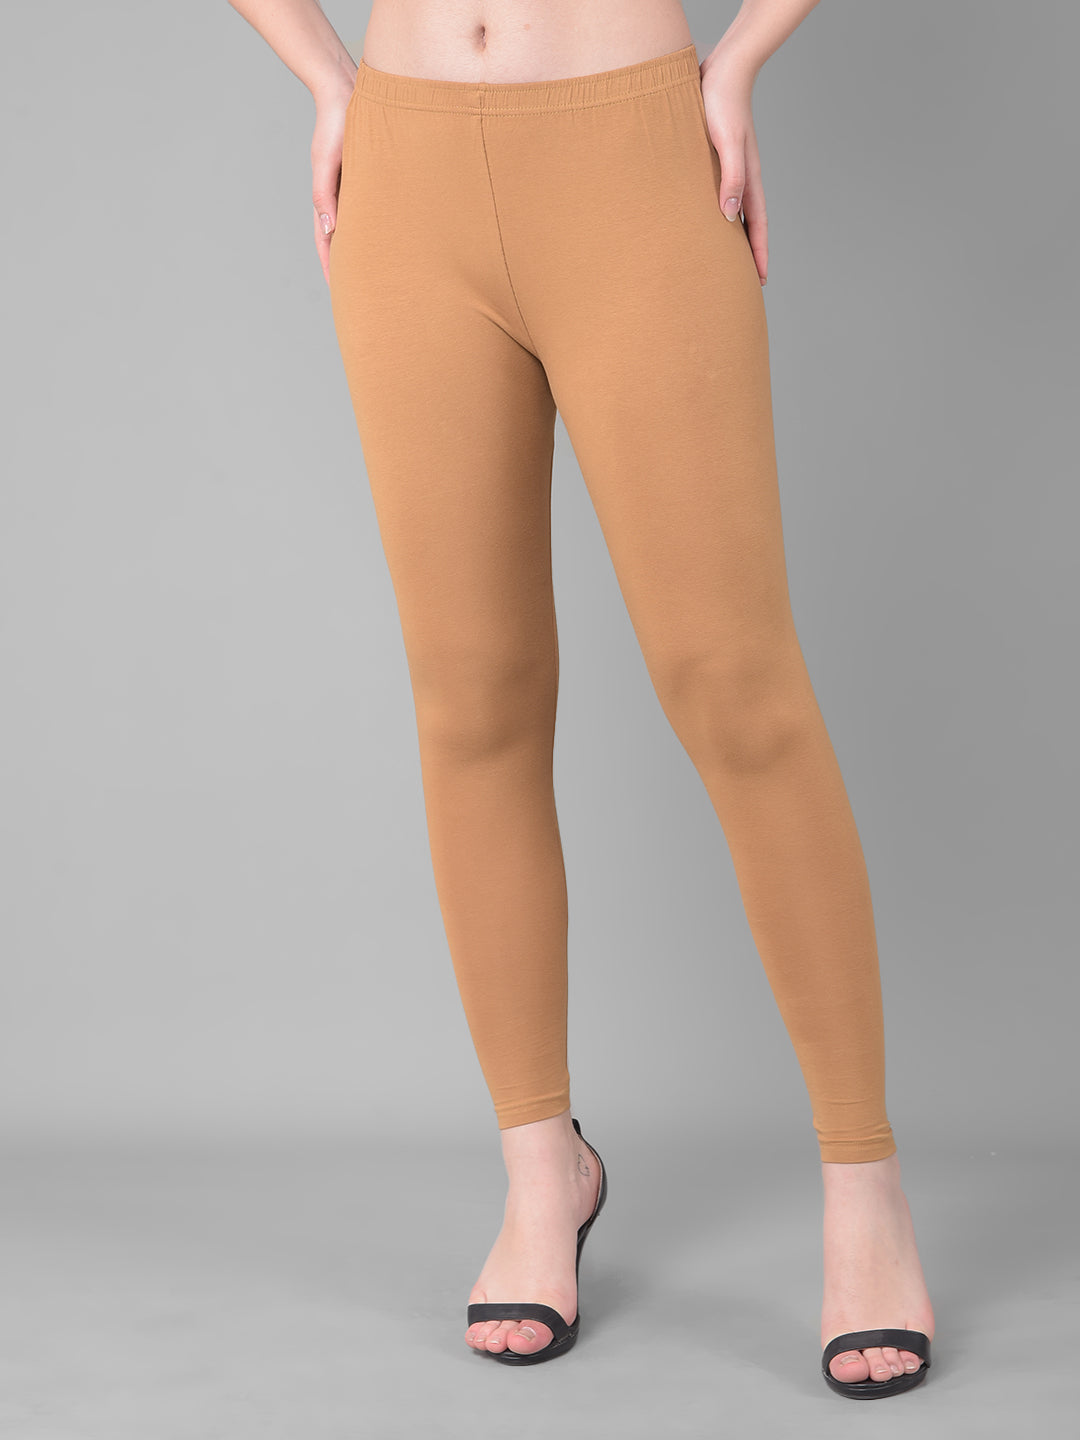 Comfort Lady Leggings Pants For Women Size